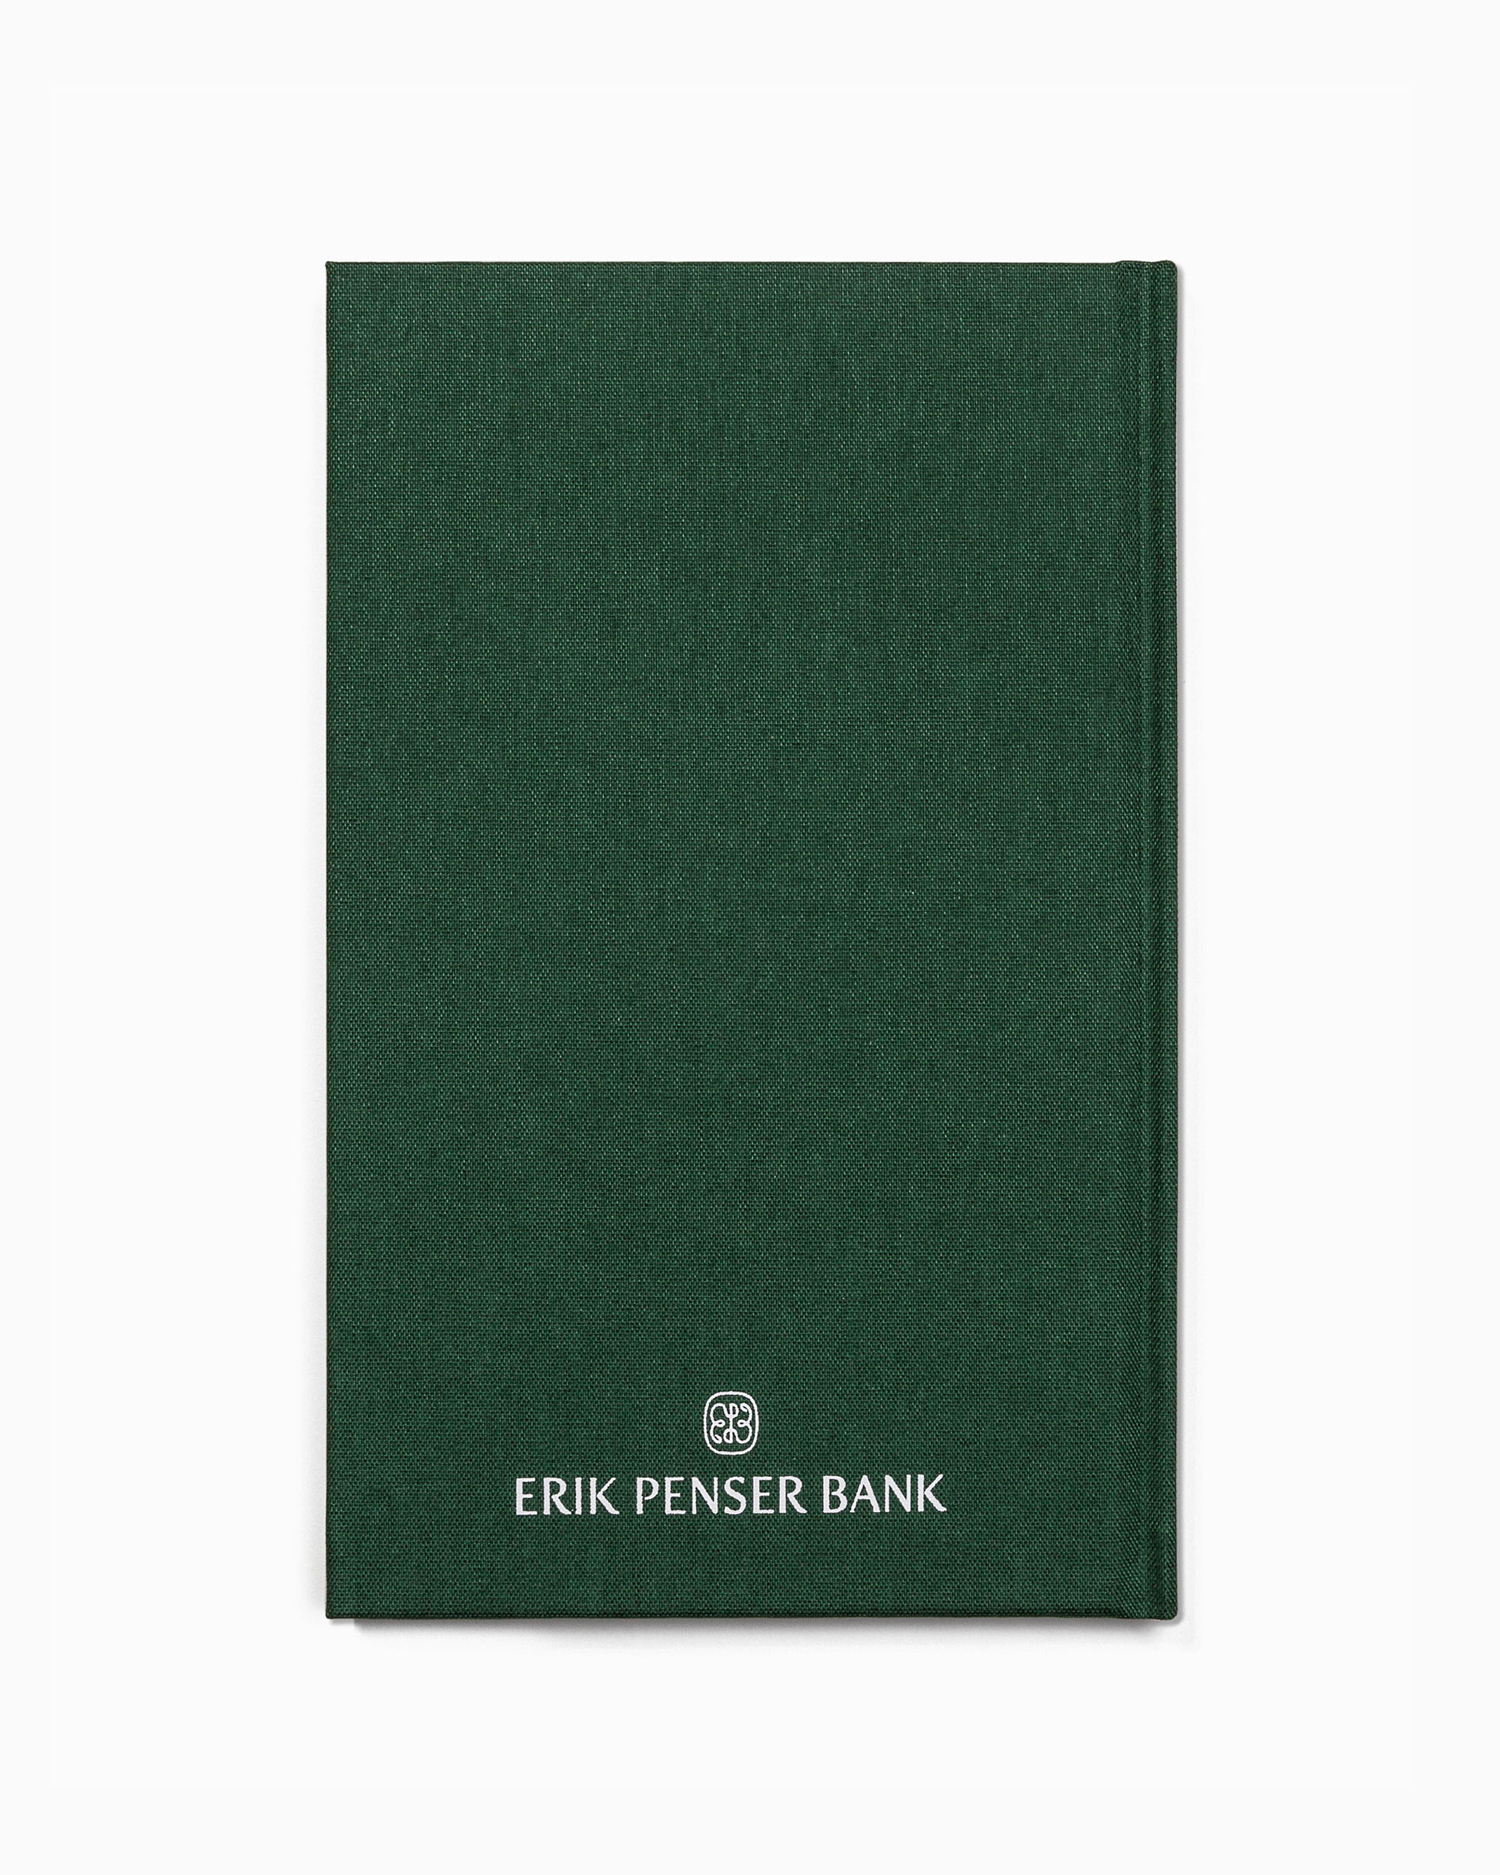 Cookbook Christmas gift by Bedow for Erik Penser Bank 2016